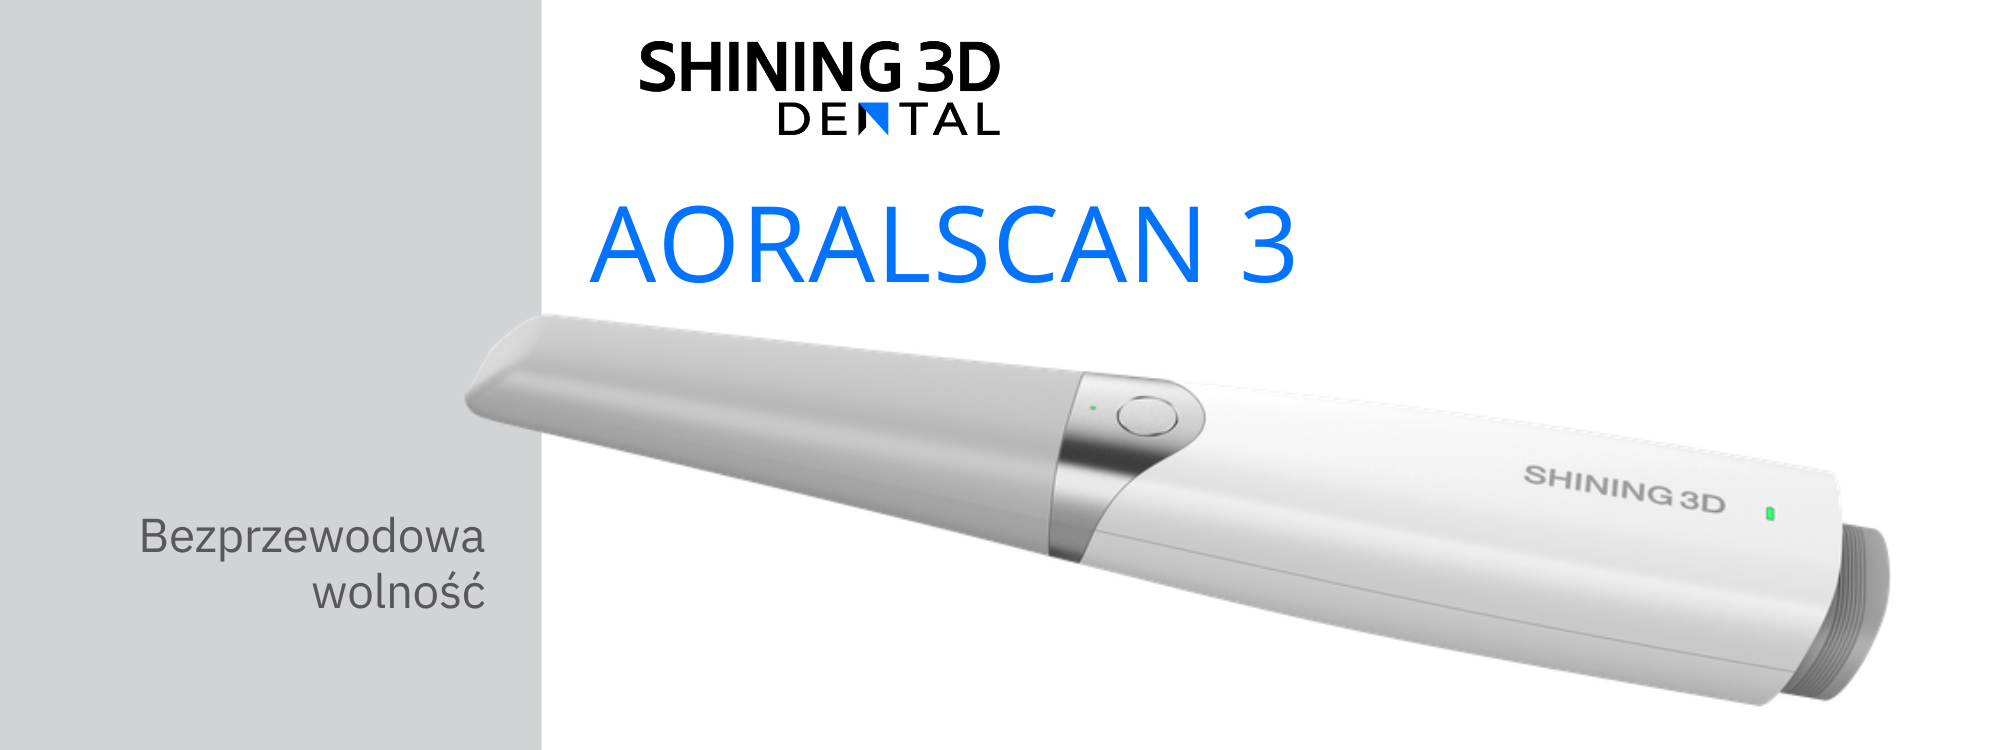 Skaner Shining 3D Aoralscan 3 Optident